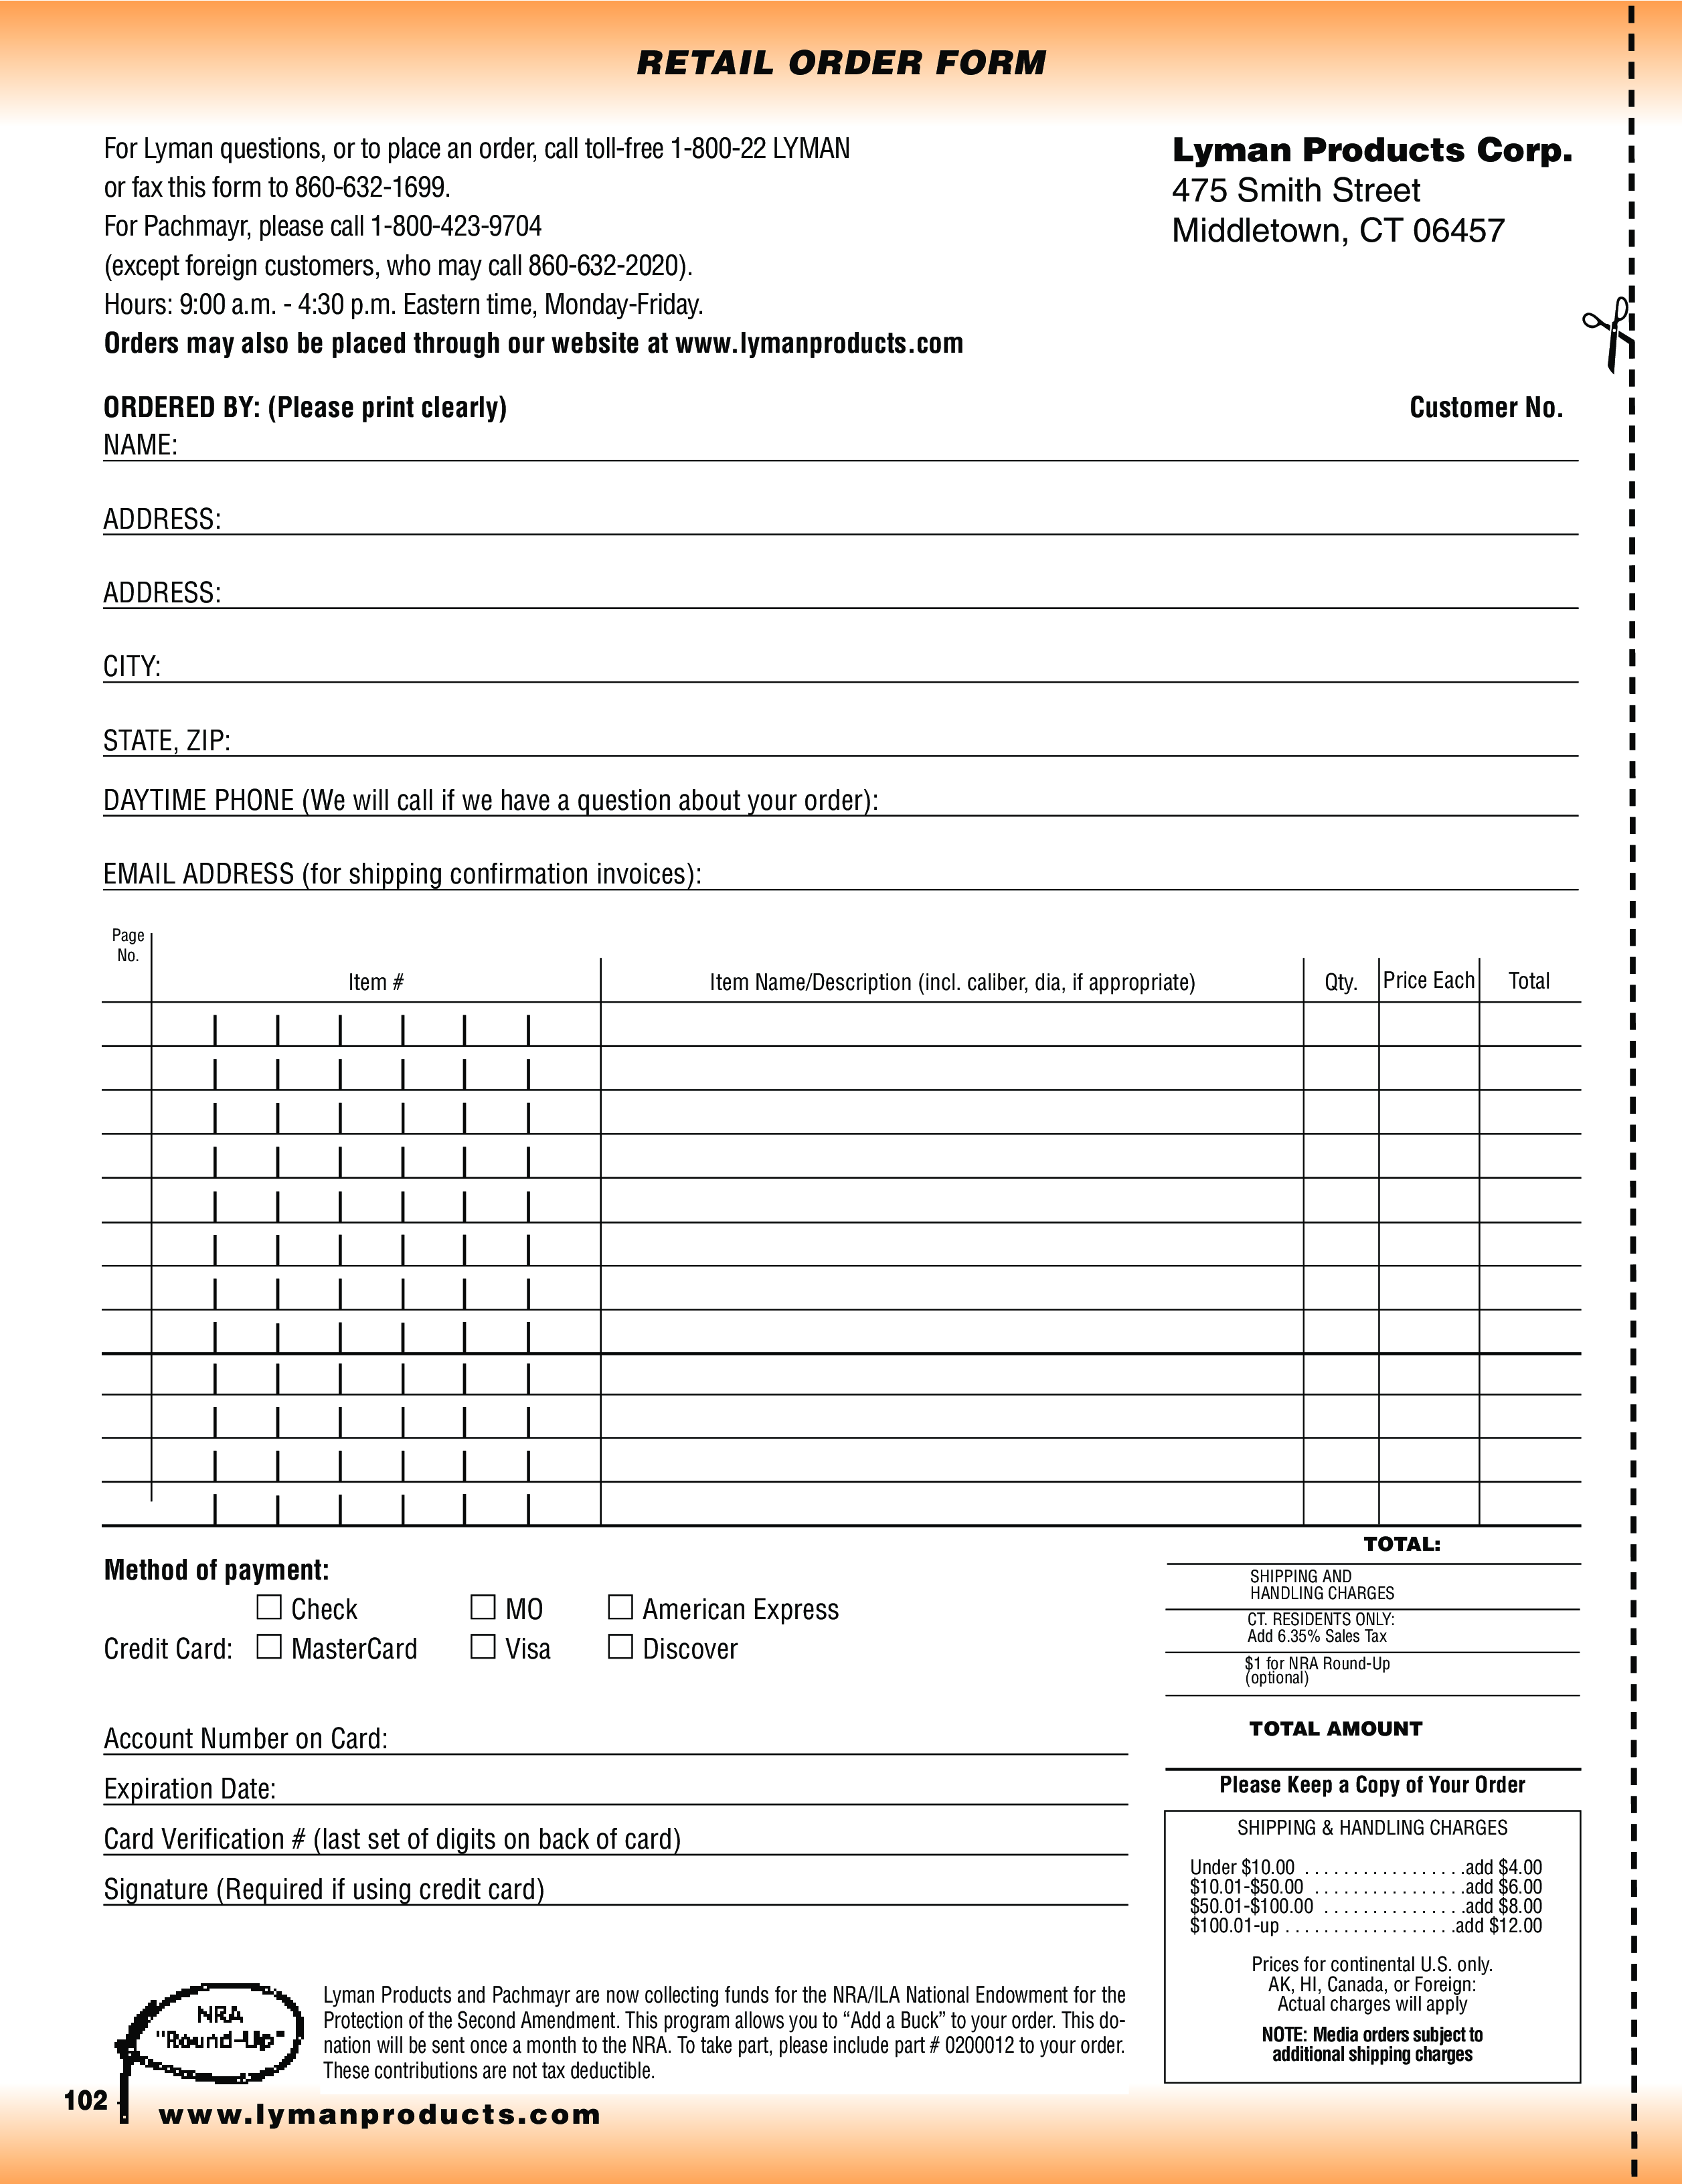 printable-retail-order-form-templates-at-allbusinesstemplates